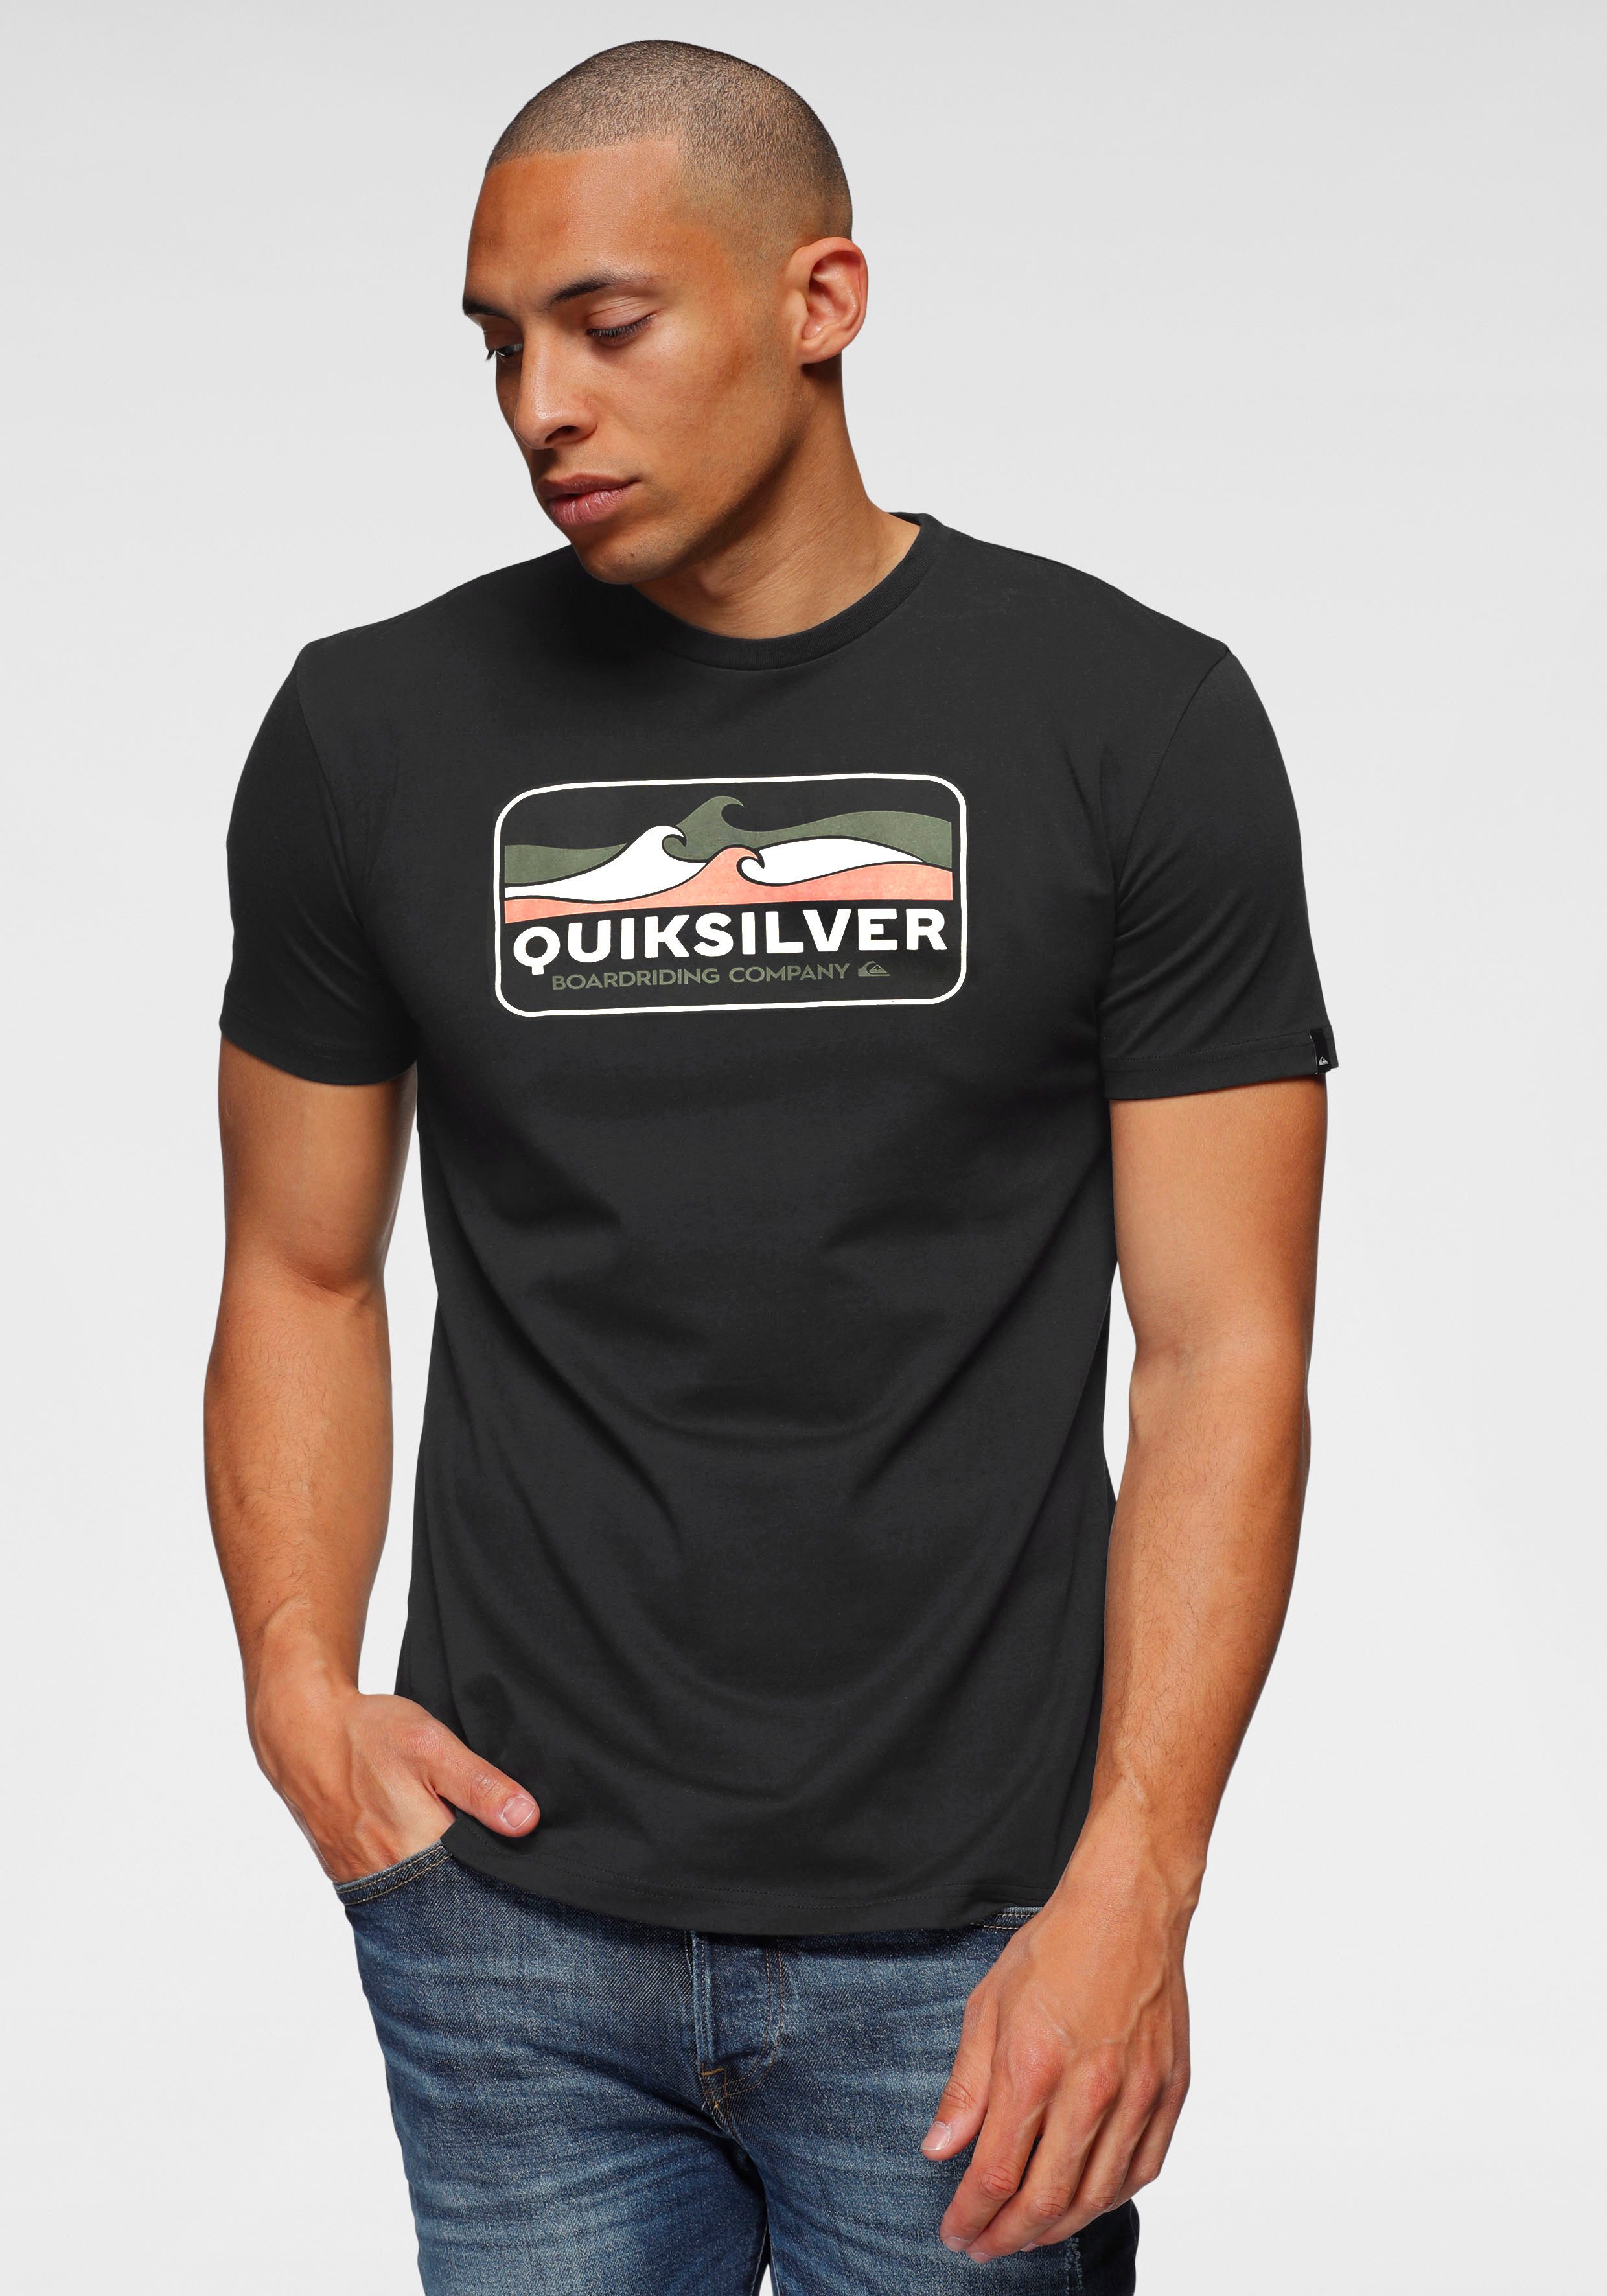 Quiksilver T-Shirt (Packung, 2-tlg., 2er-Pack), Aus reiner Baumwolle